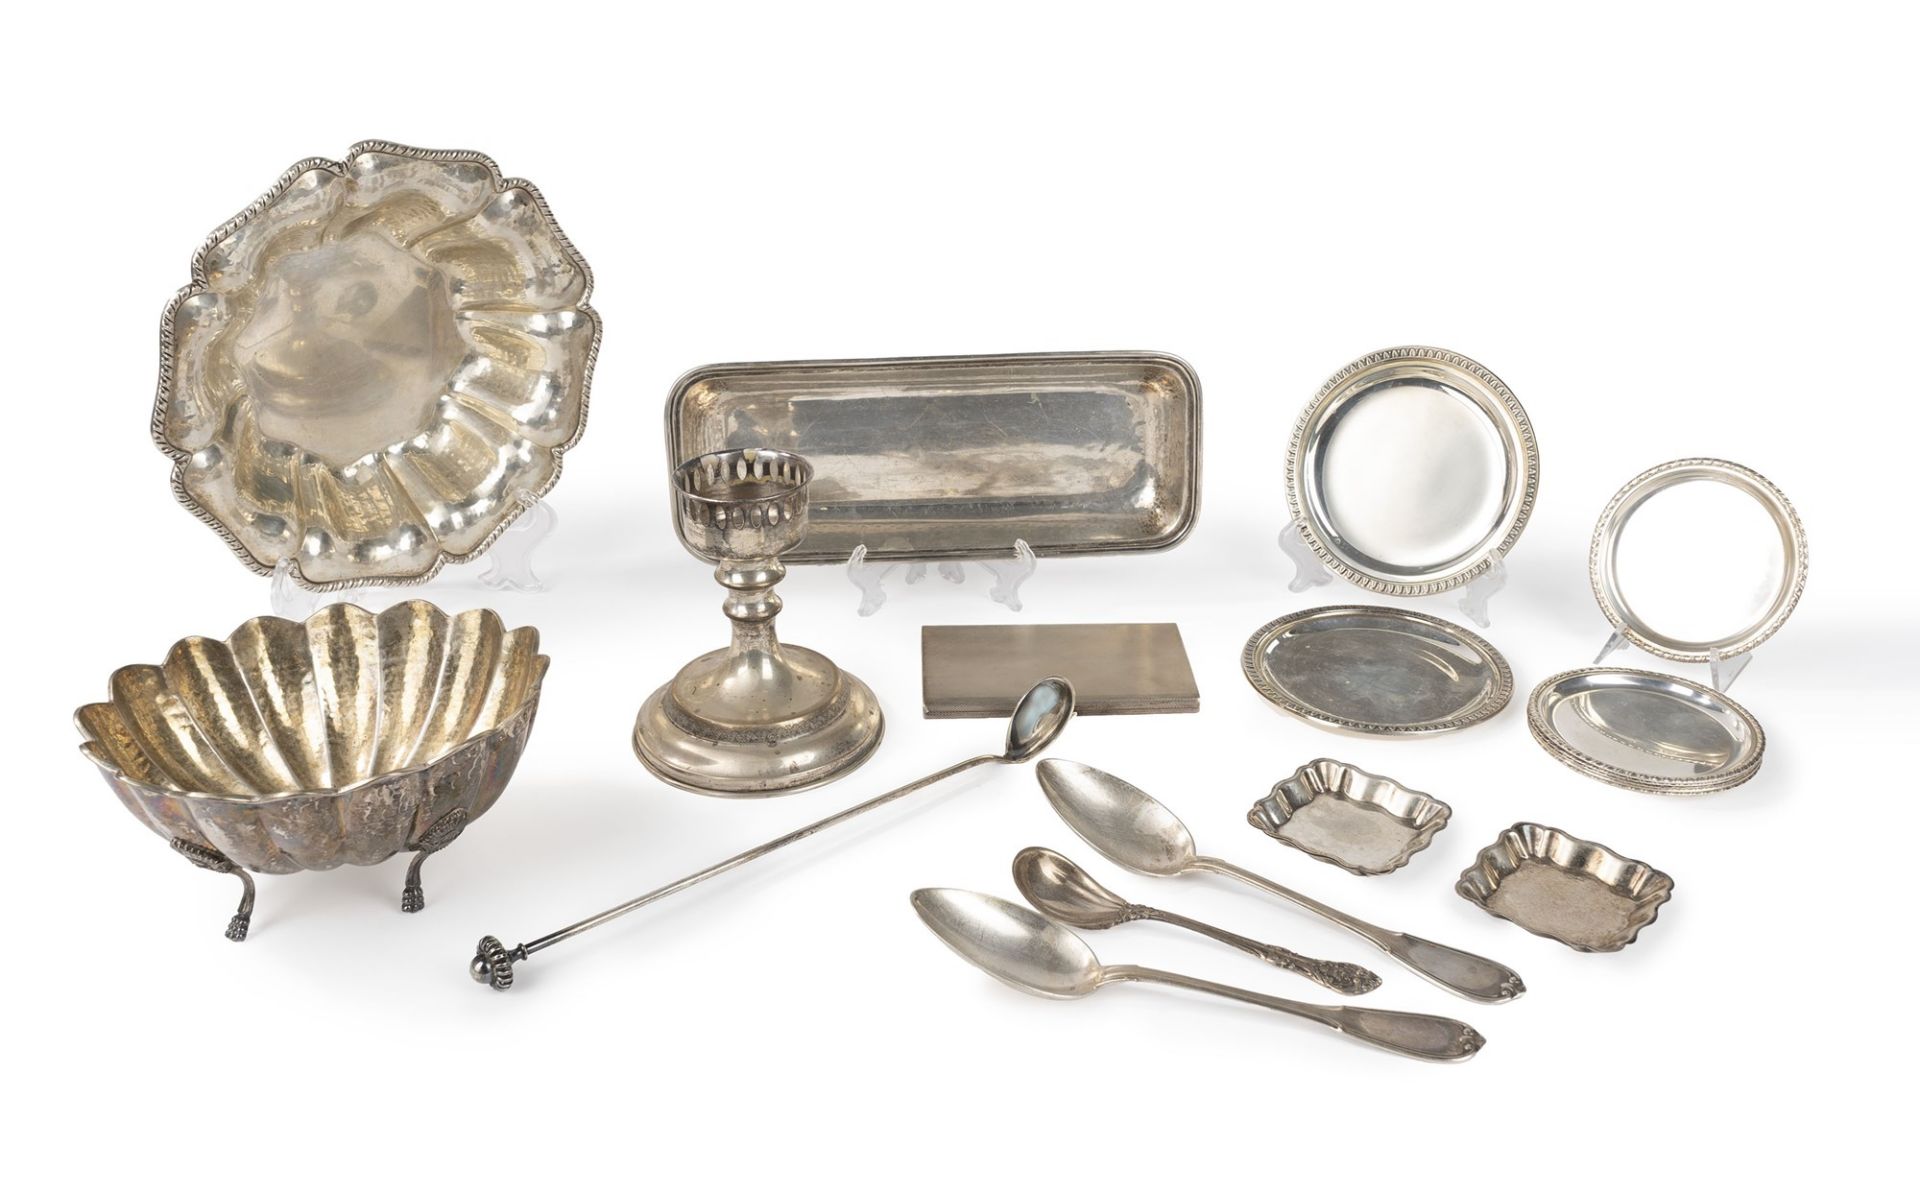 Lot made up of twenty silver items 20th century